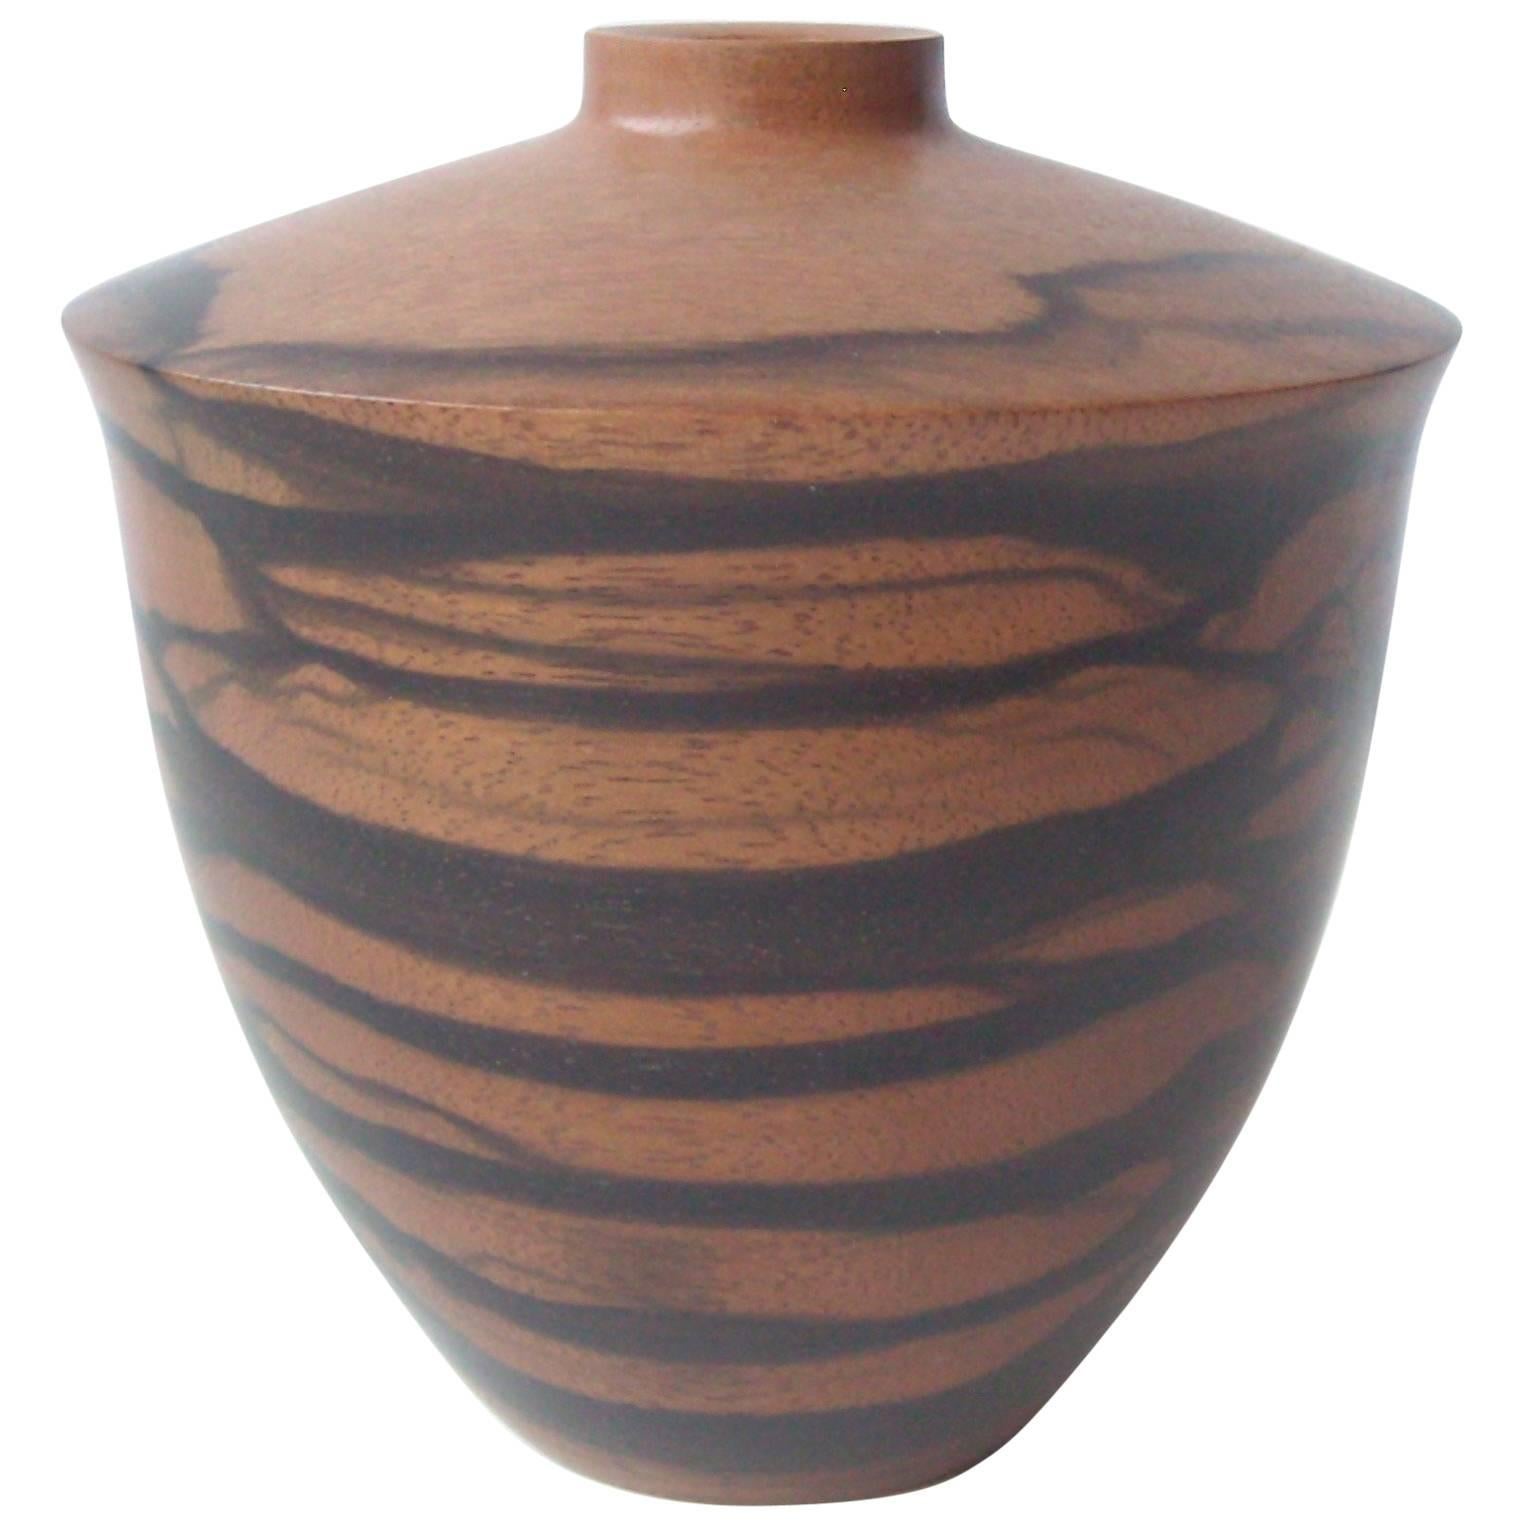 Dan Kvitka Turned Wood Vessel, Bowl or Vase in Ebony Wood, Signed Dated